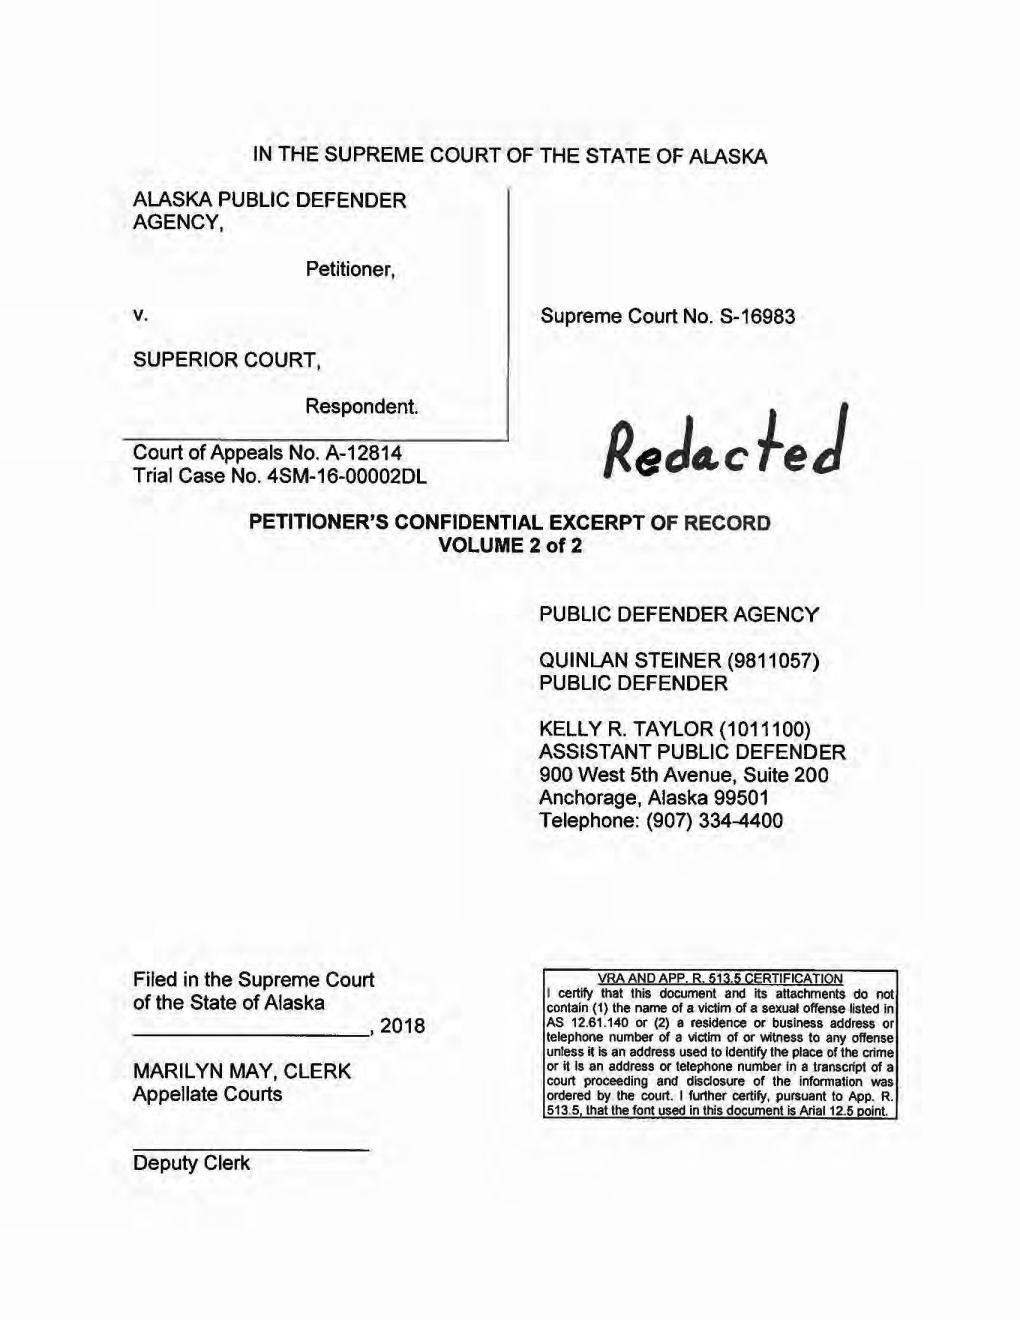 Alaska Public Defender Agency V. Superior Court, S-16983, Redacted